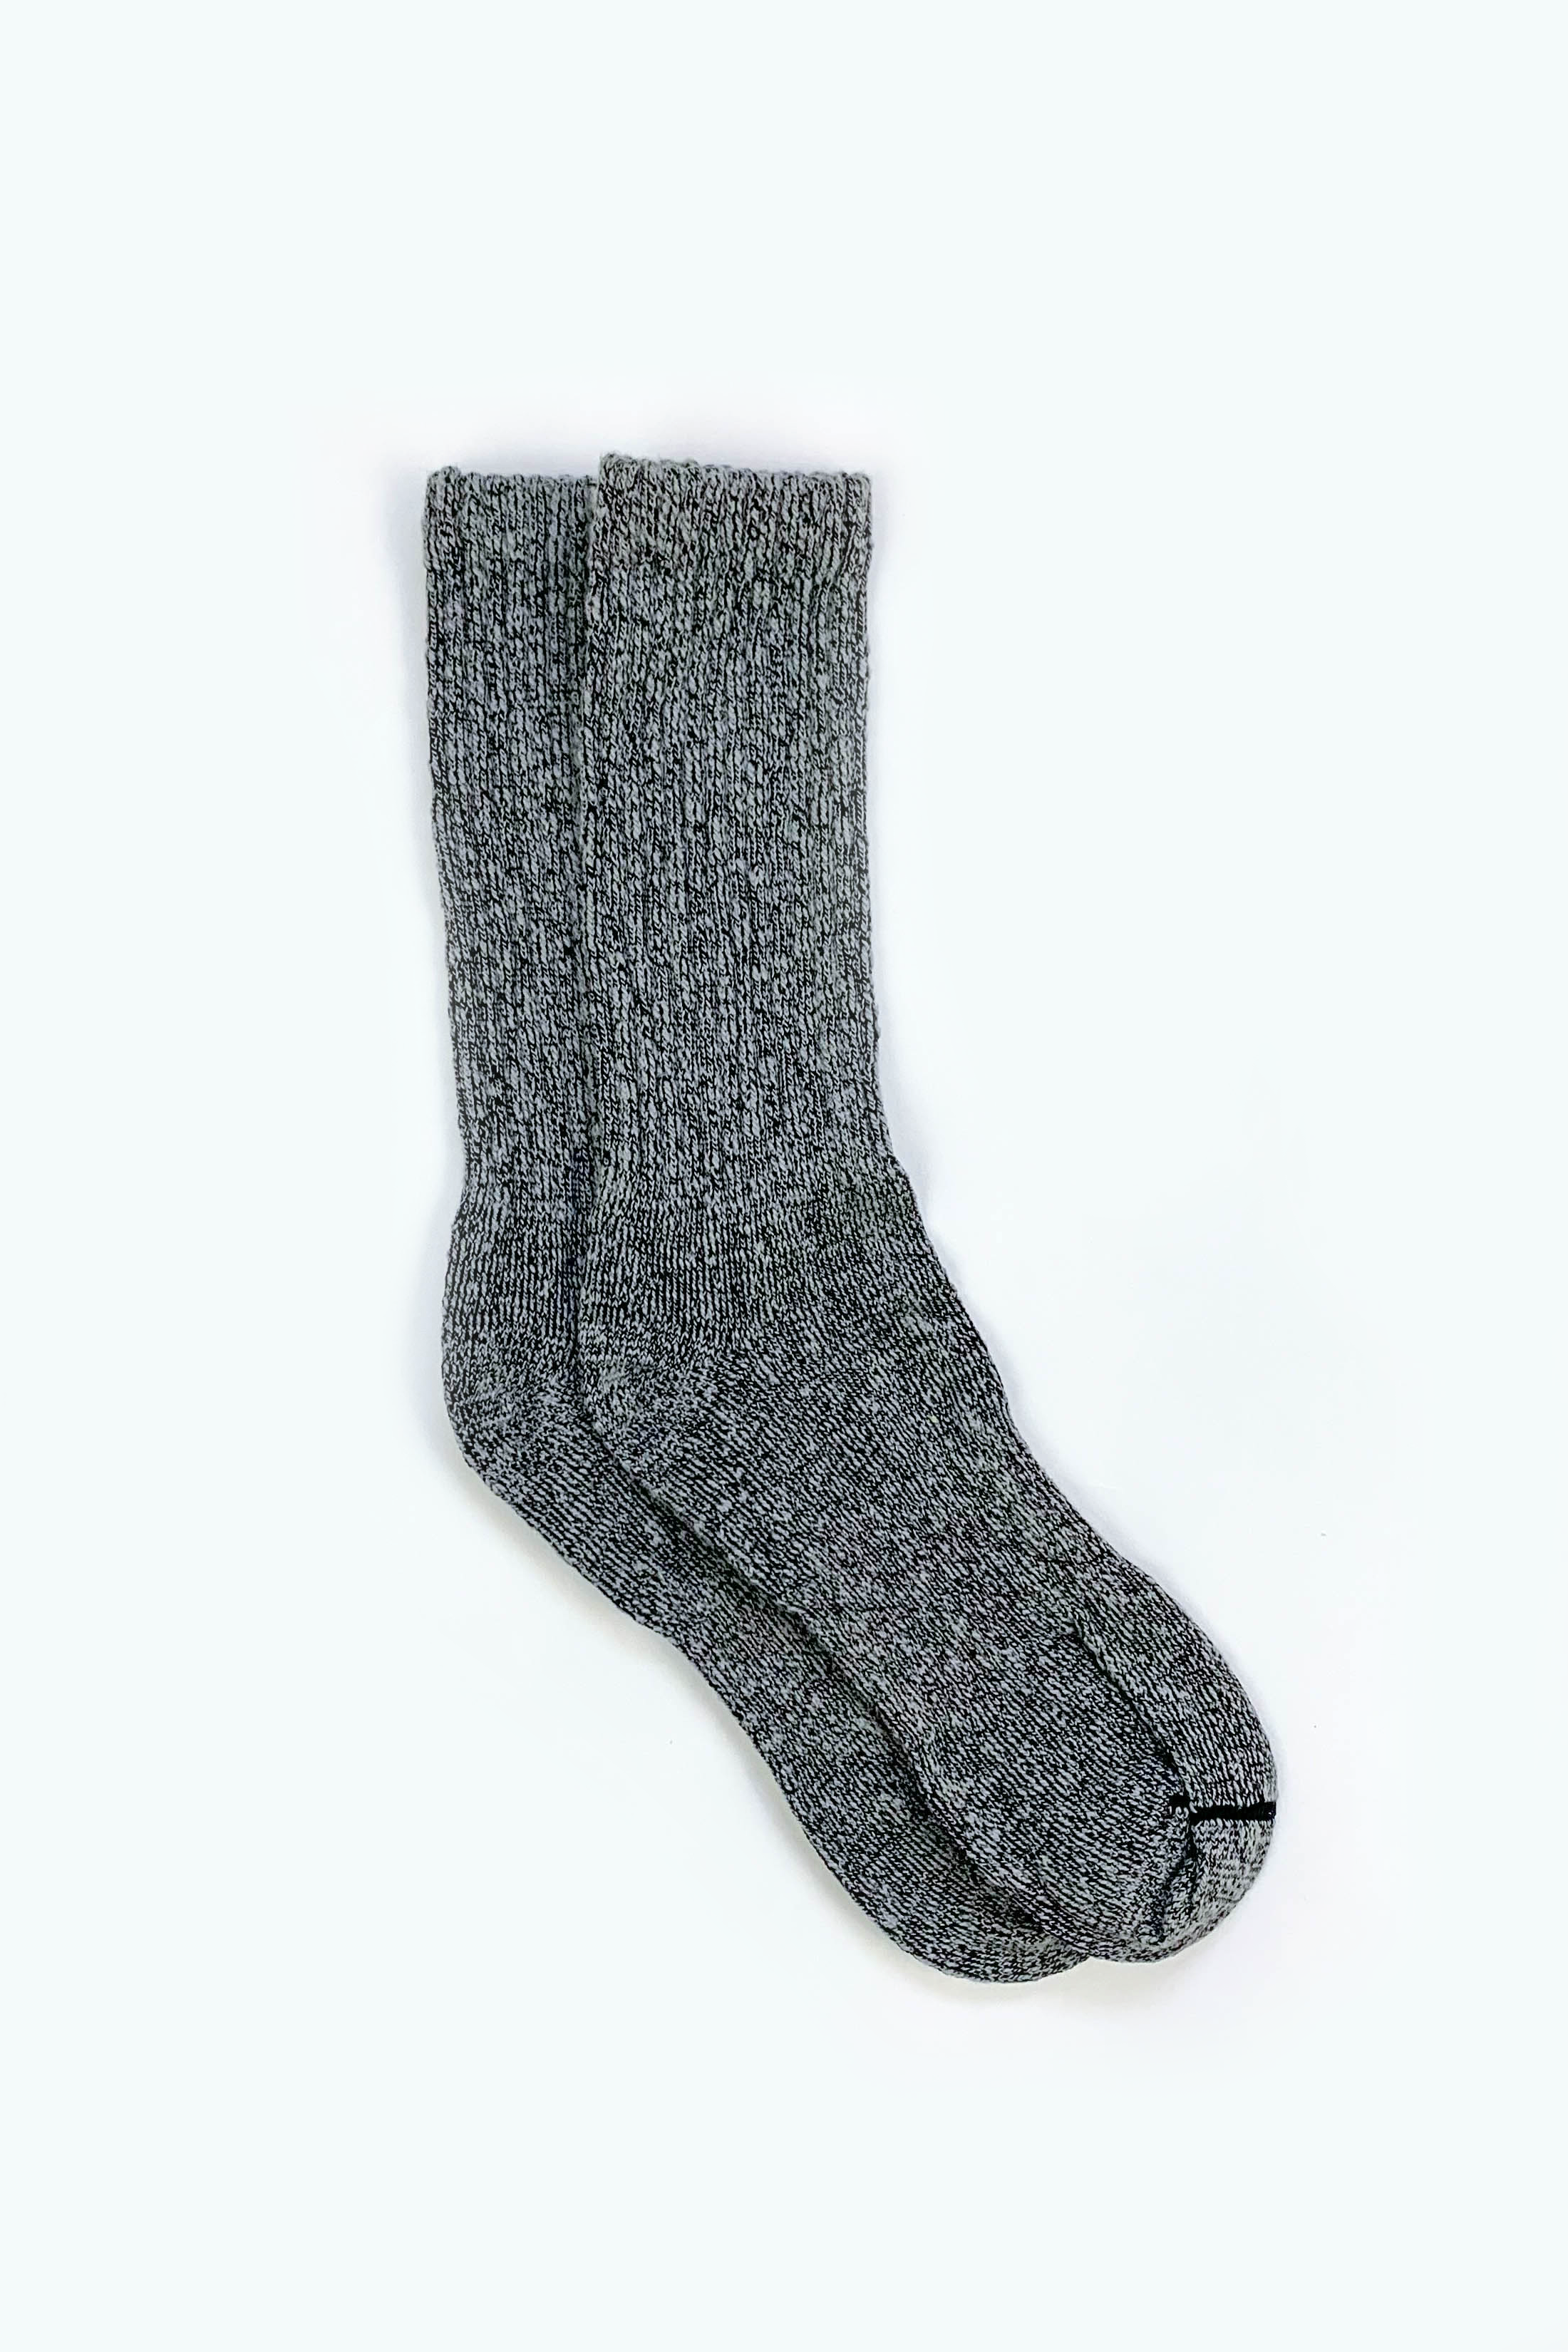 Overdyed Cotton Ragg Crew Sock in Black/Grey - Philistine